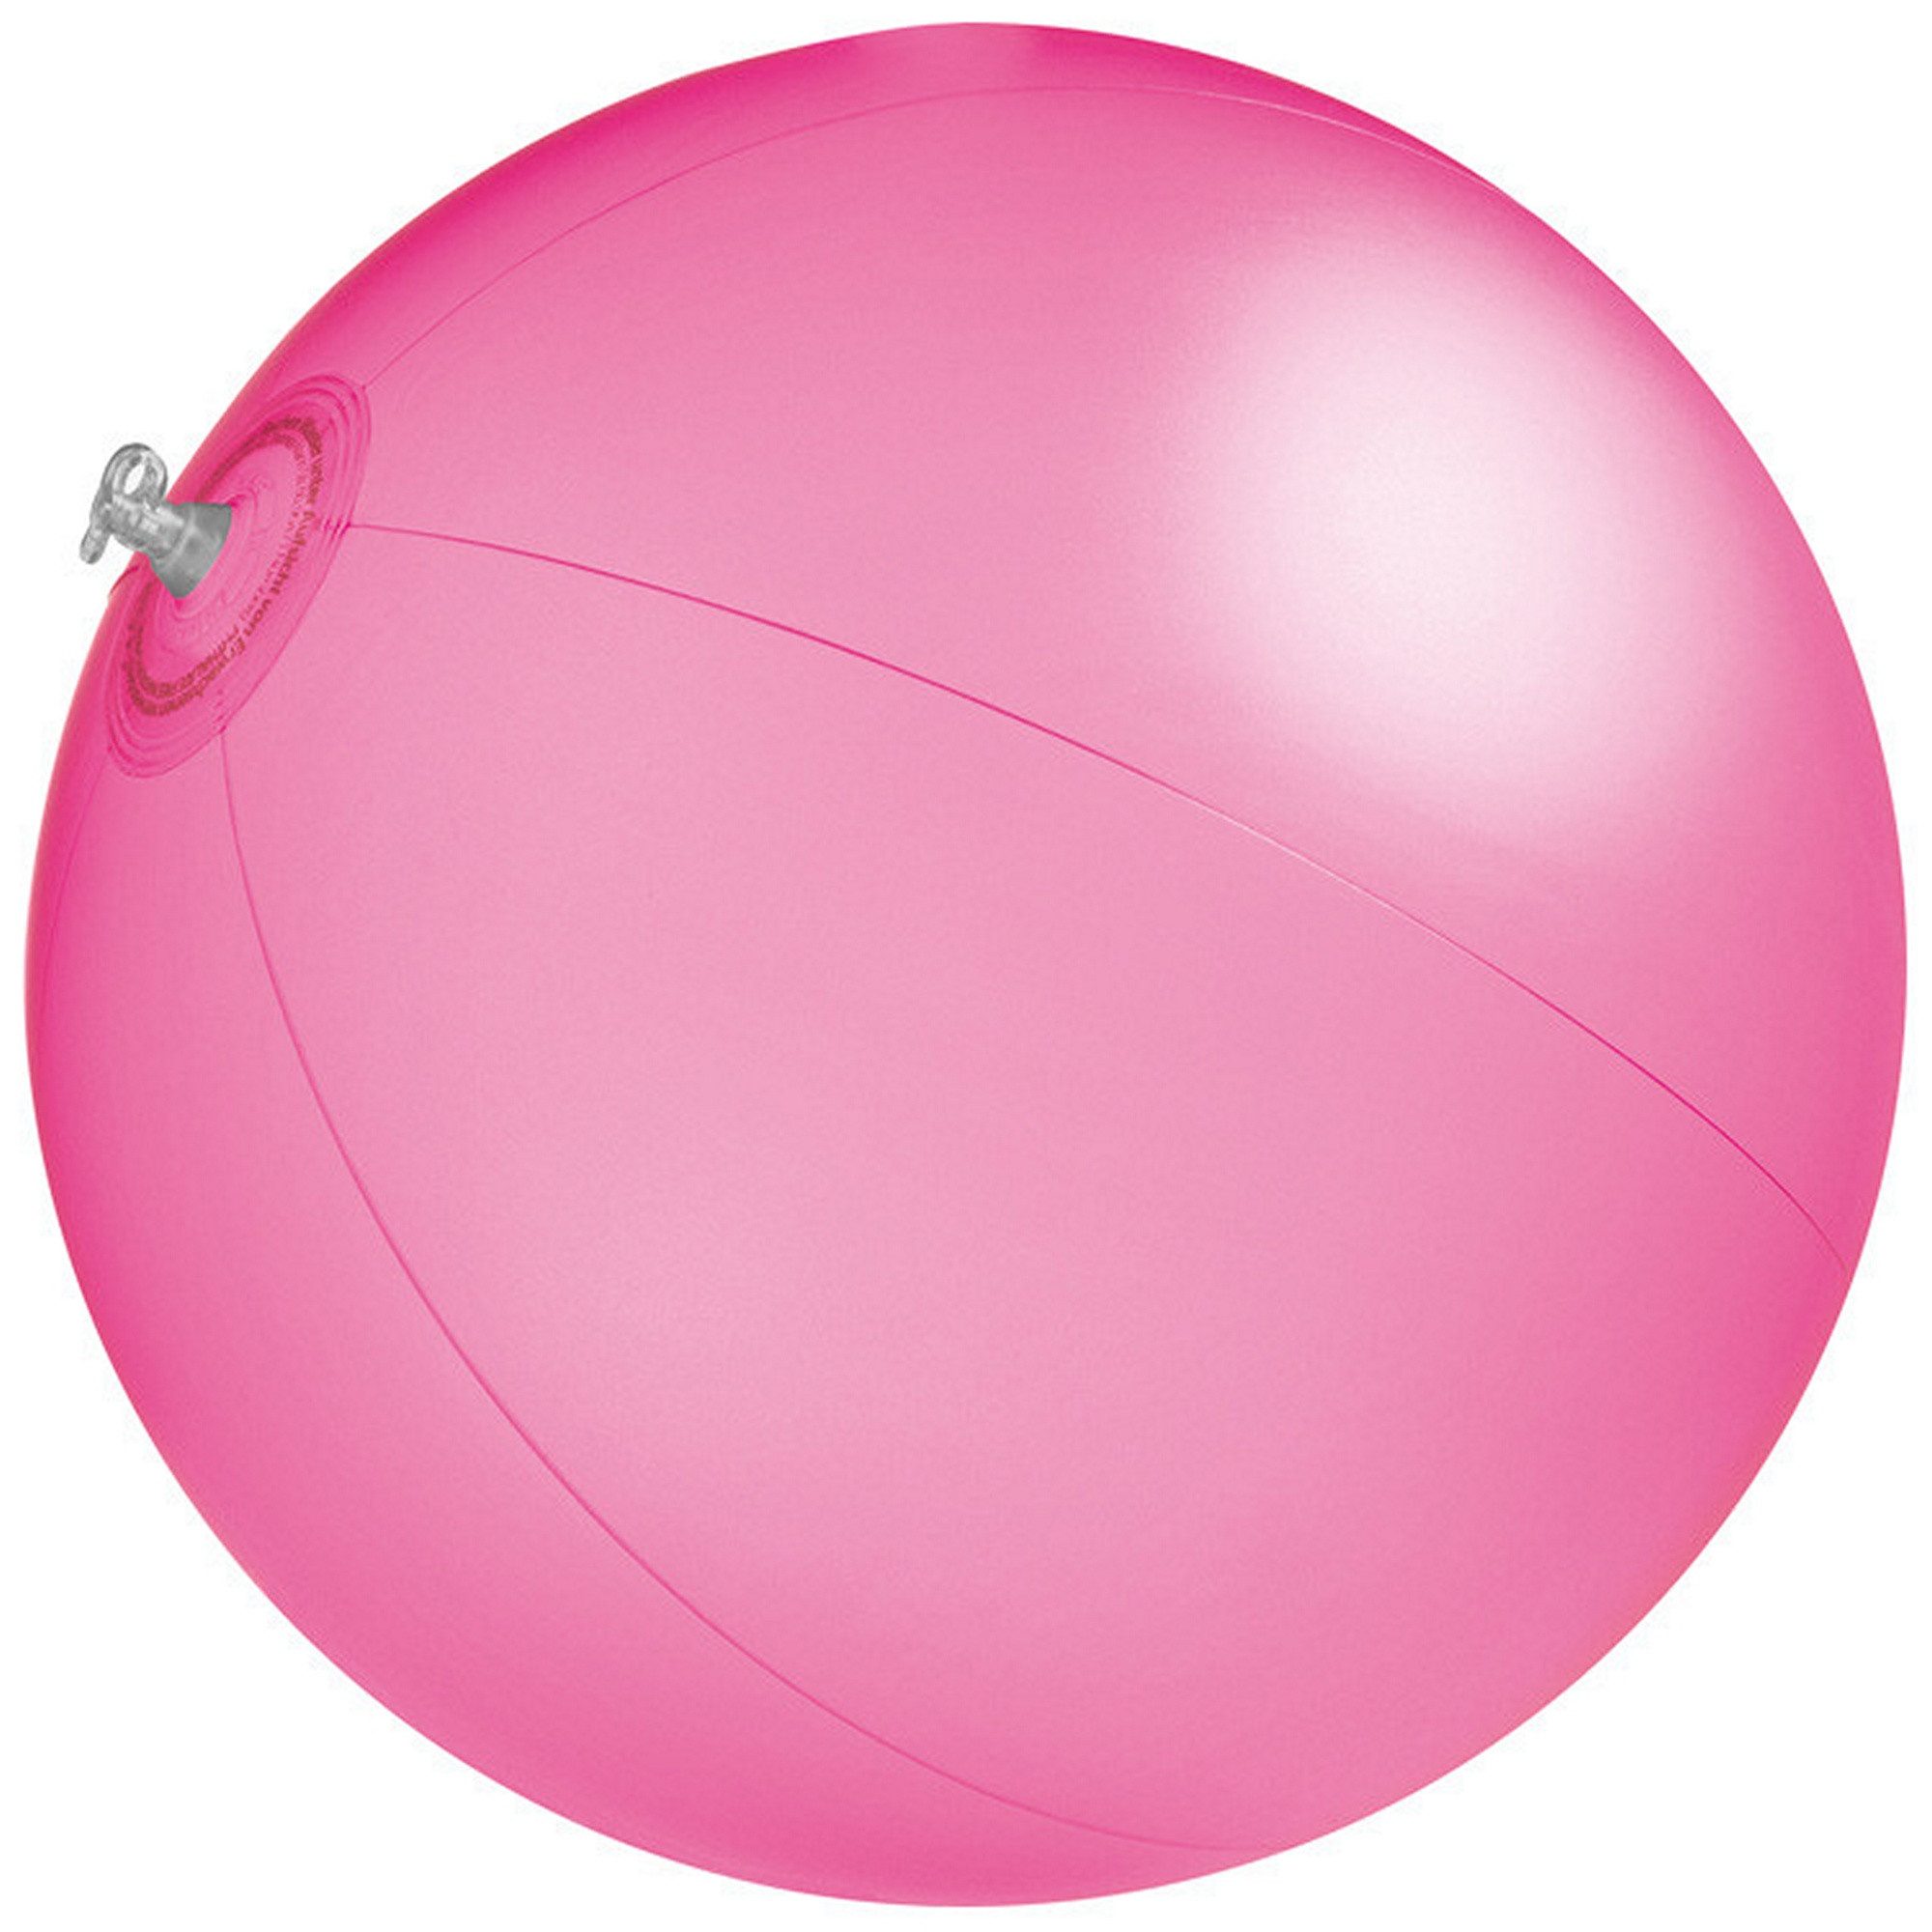 Livepac Office Wasserball Strandball / Wasserball / Farbe: pink